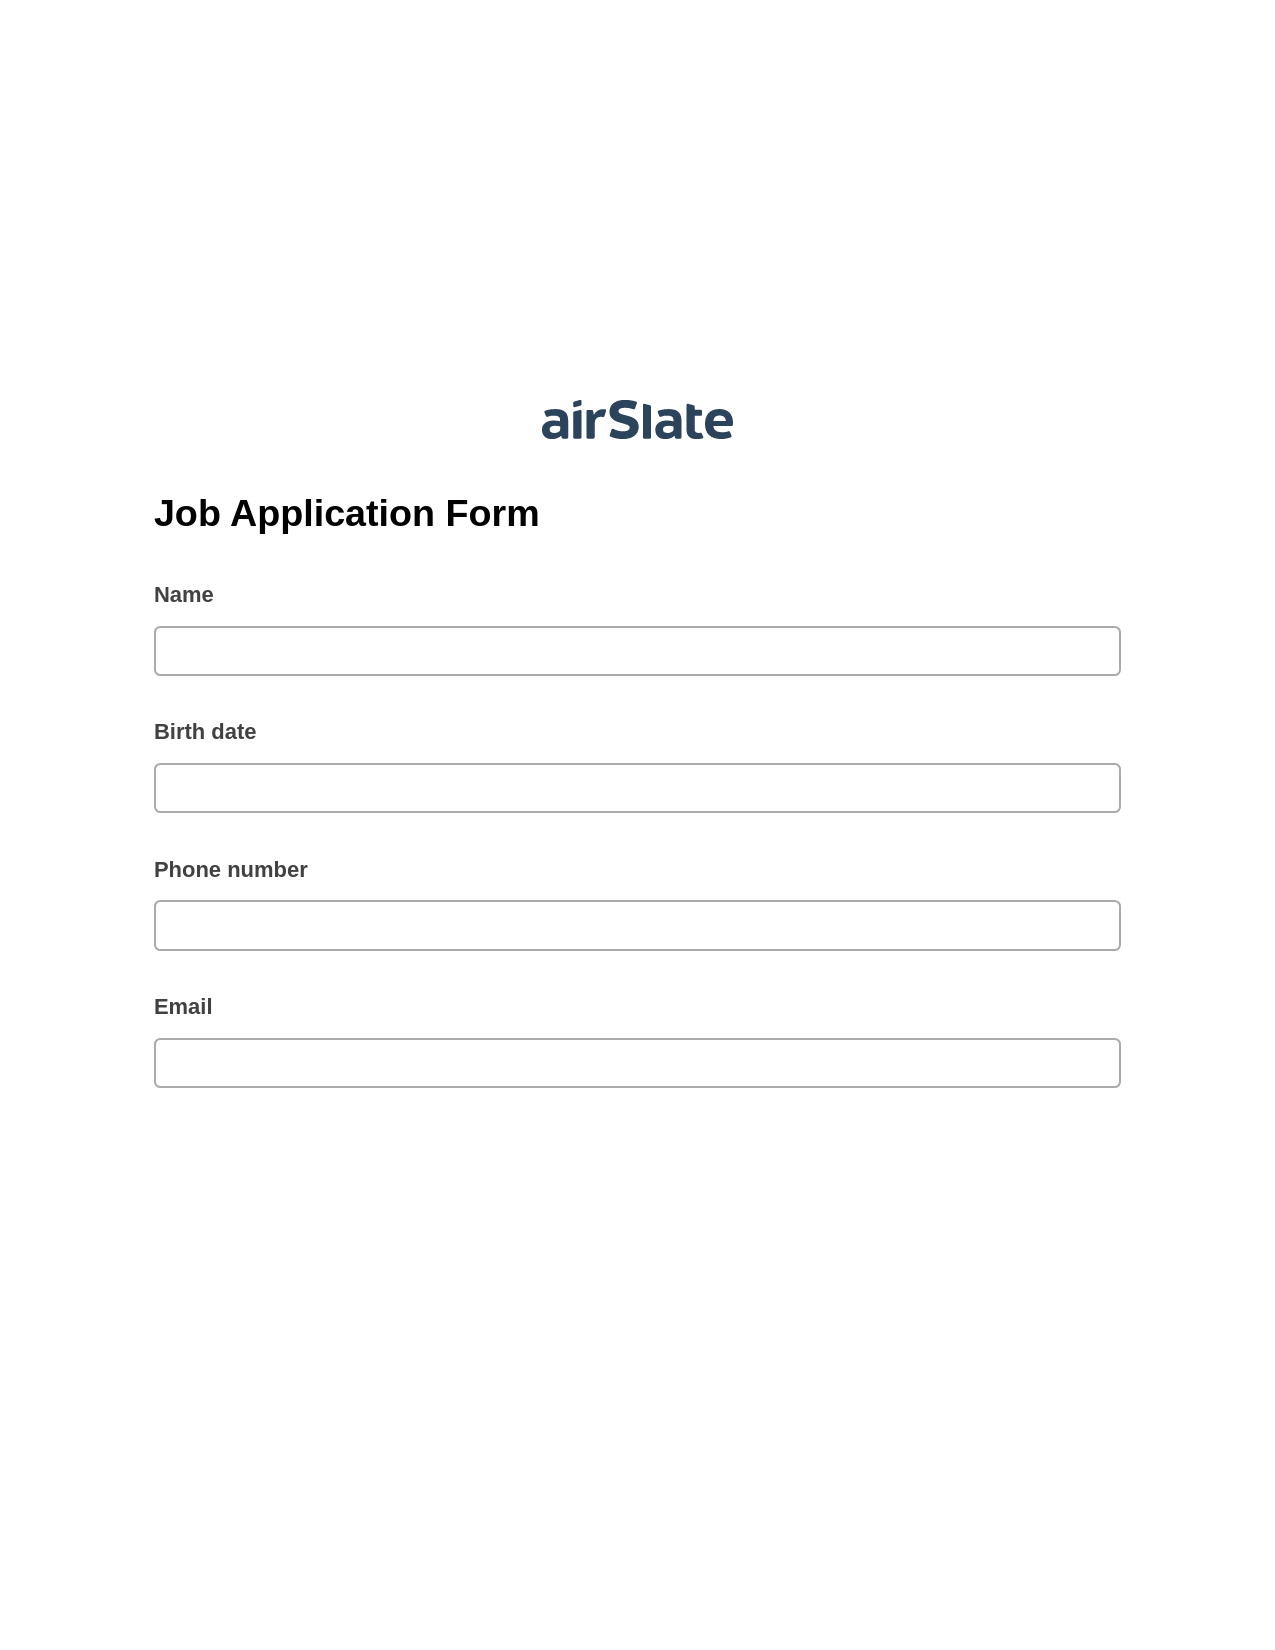 Job Application Form Pre-fill from MySQL Dropdown Options Bot, Mailchimp send Campaign bot, Export to MySQL Bot